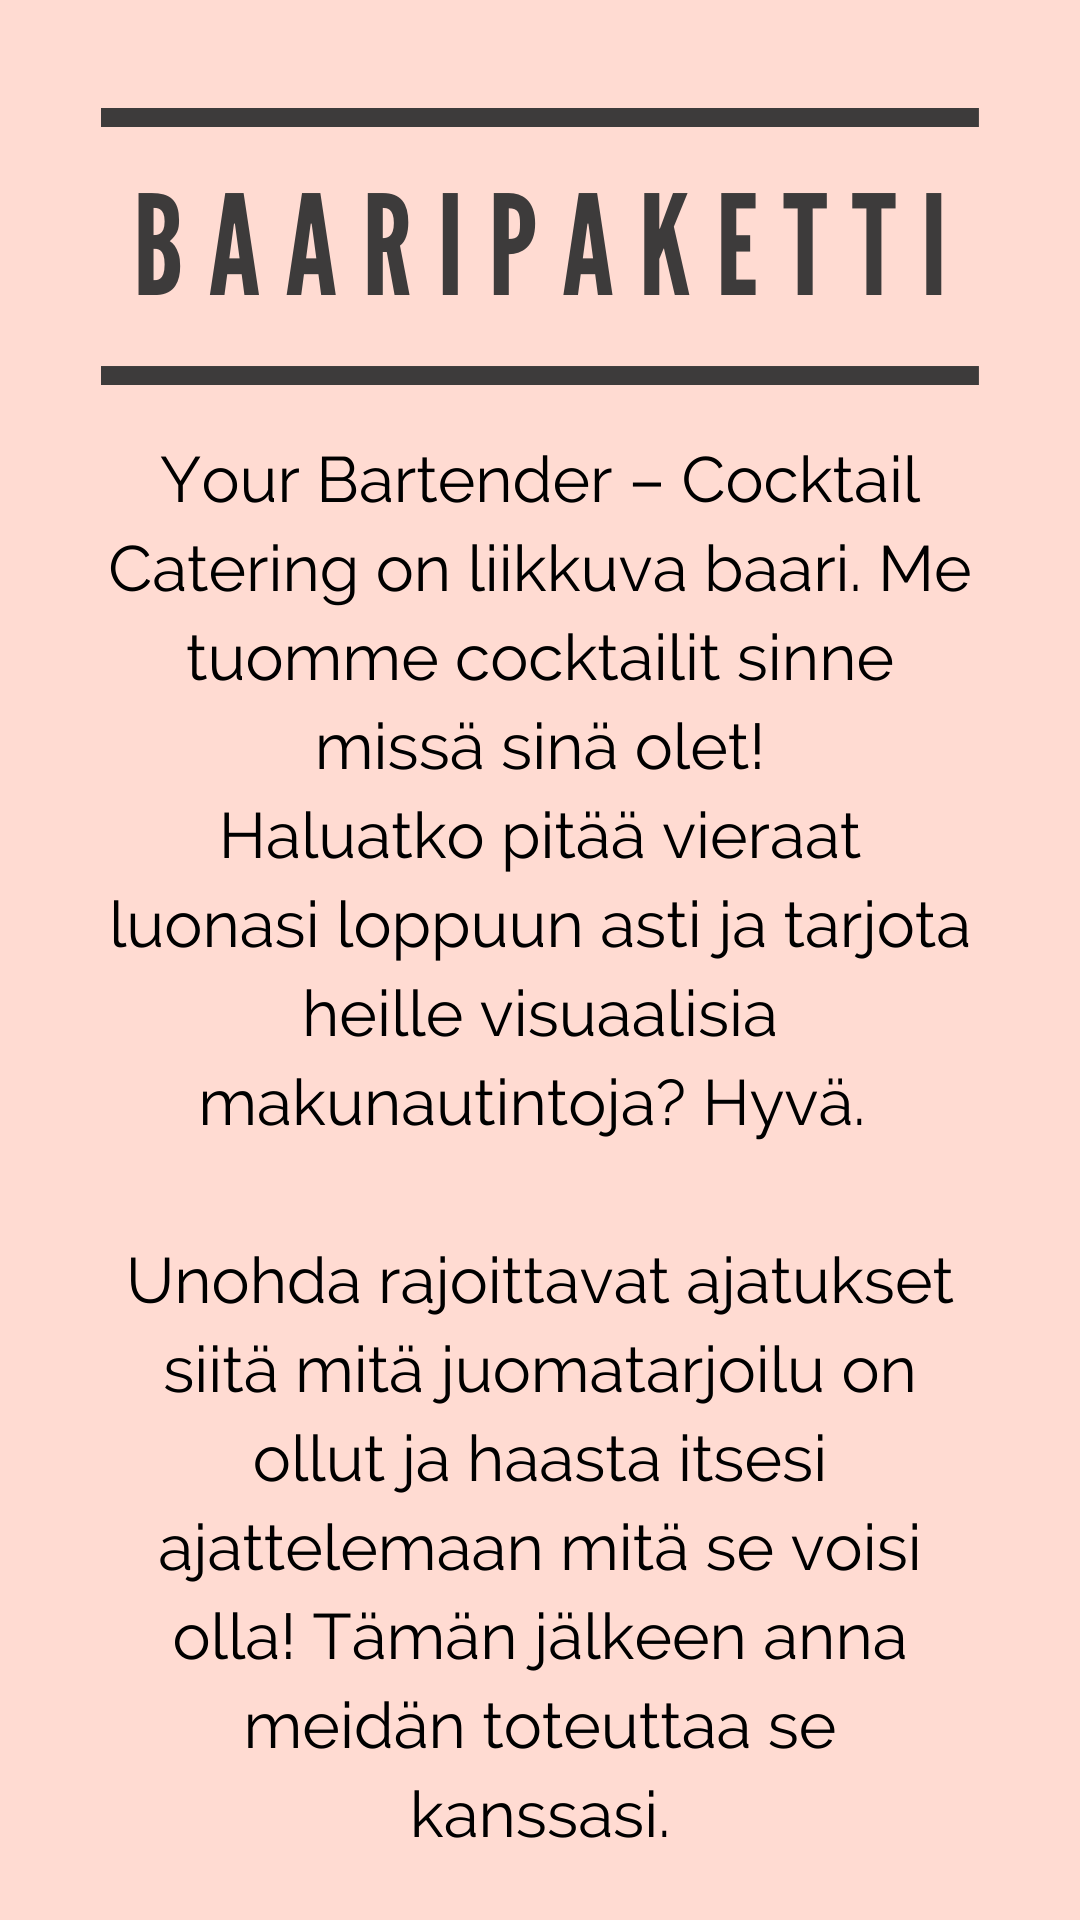 Baaripaketti Your Bartender Cocktail Catering